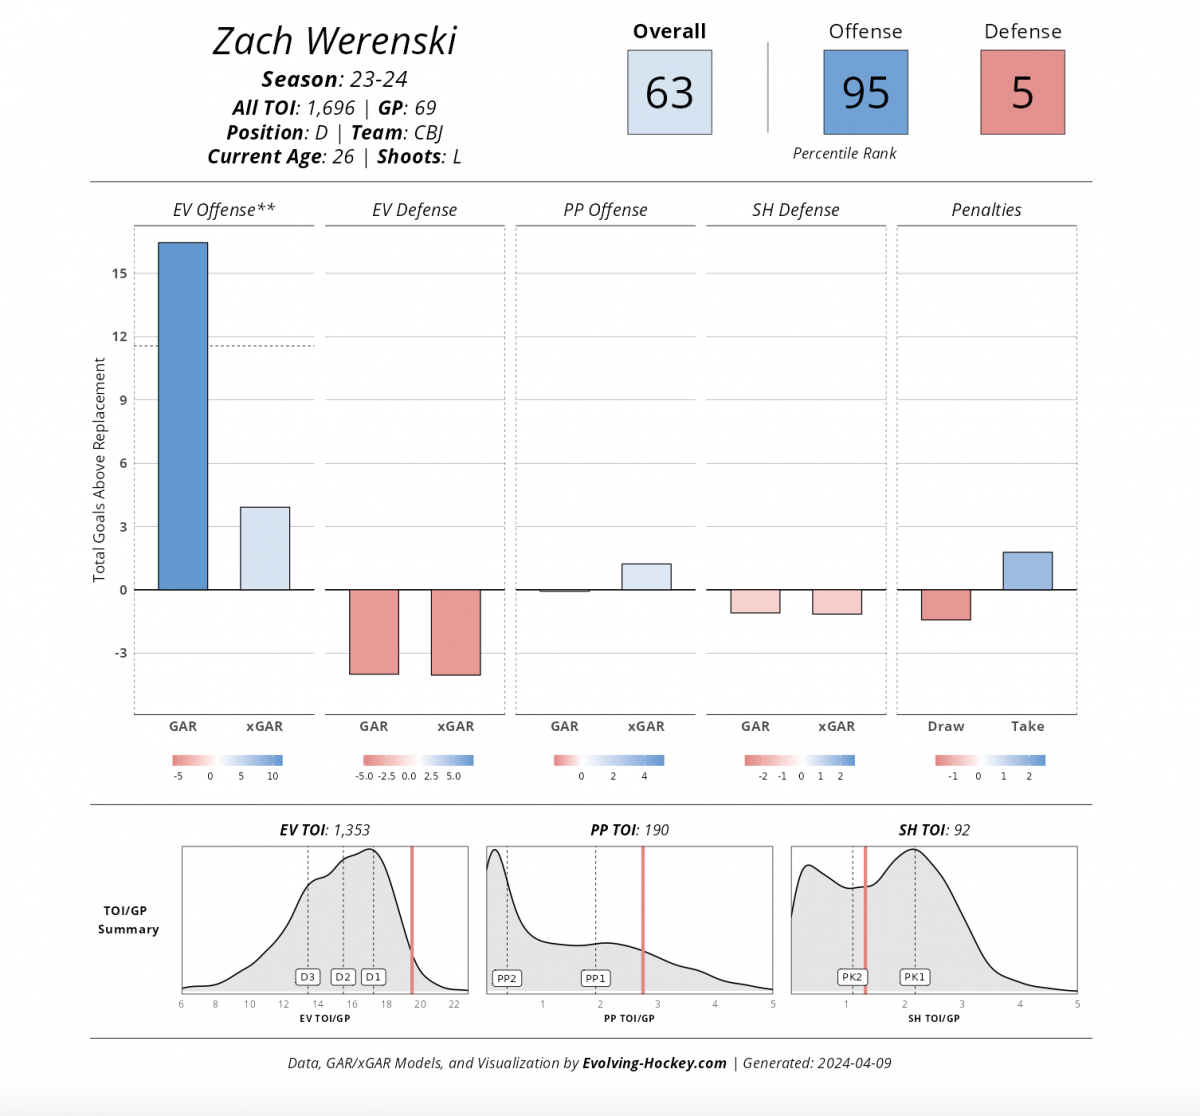 Zach Werenski's '23-'24 player card, Evolving-Hockey